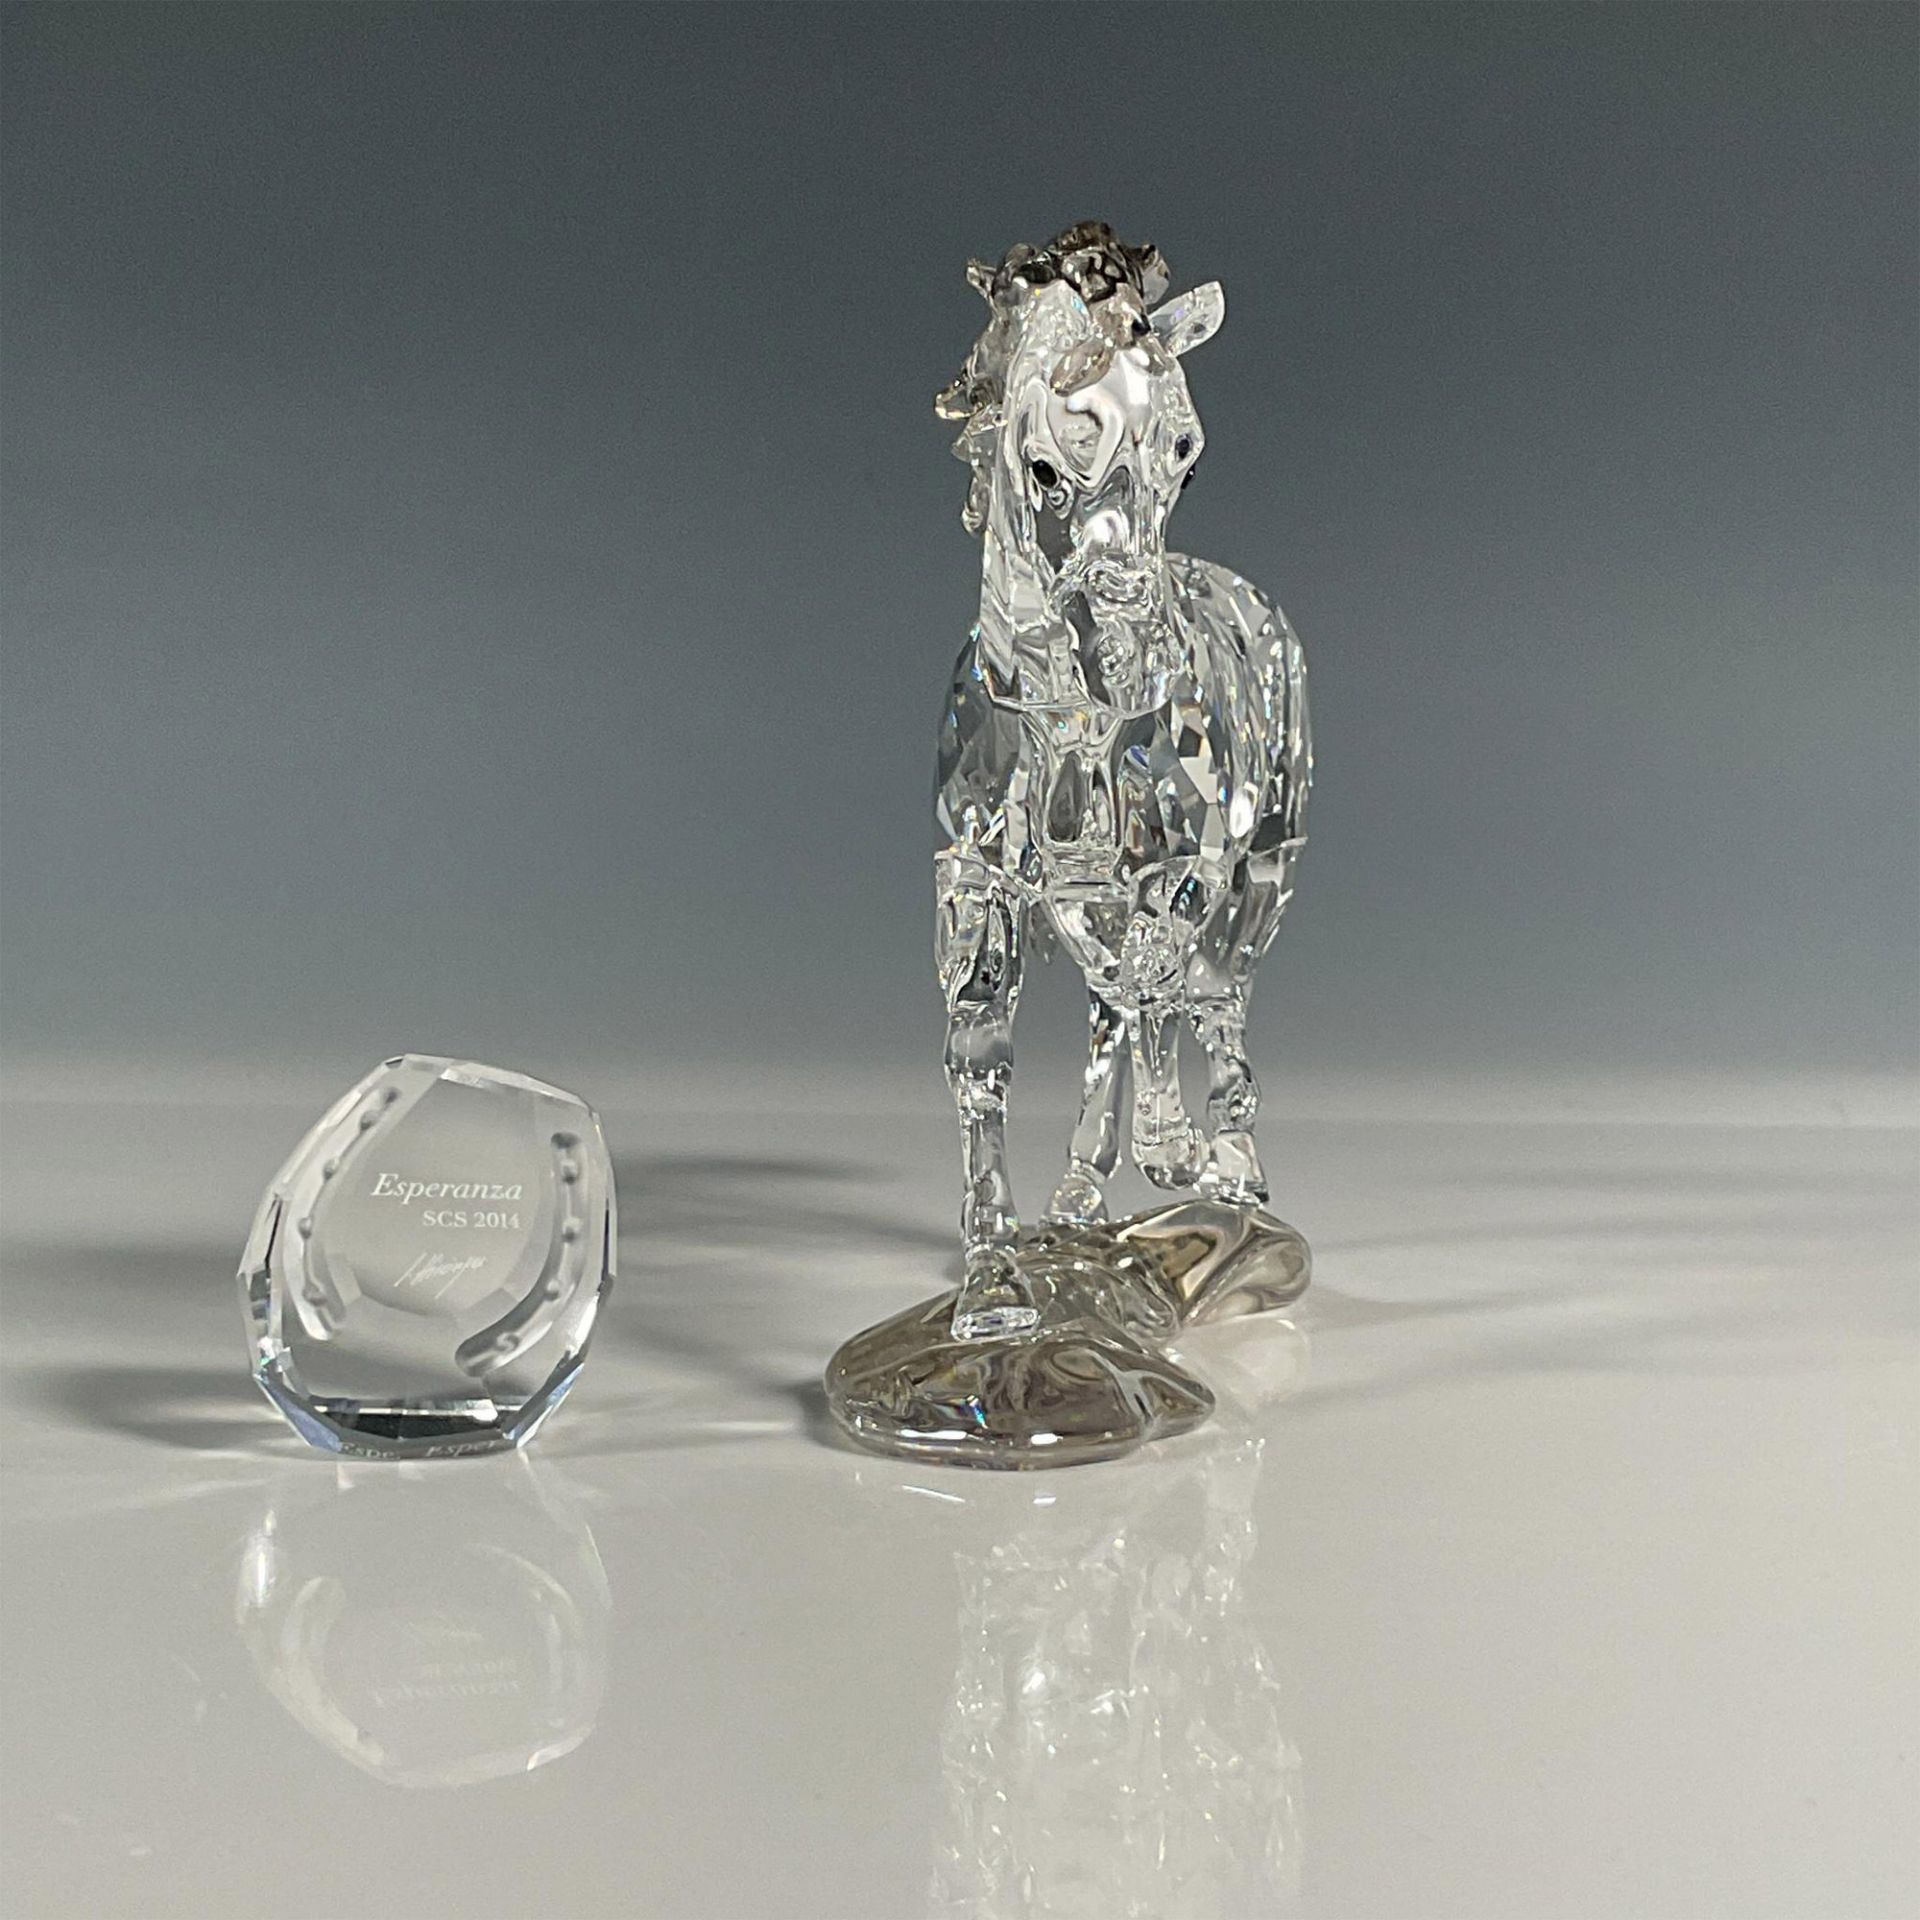 Swarovski Crystal Figurine with Plaque, Esperanza - Image 2 of 6